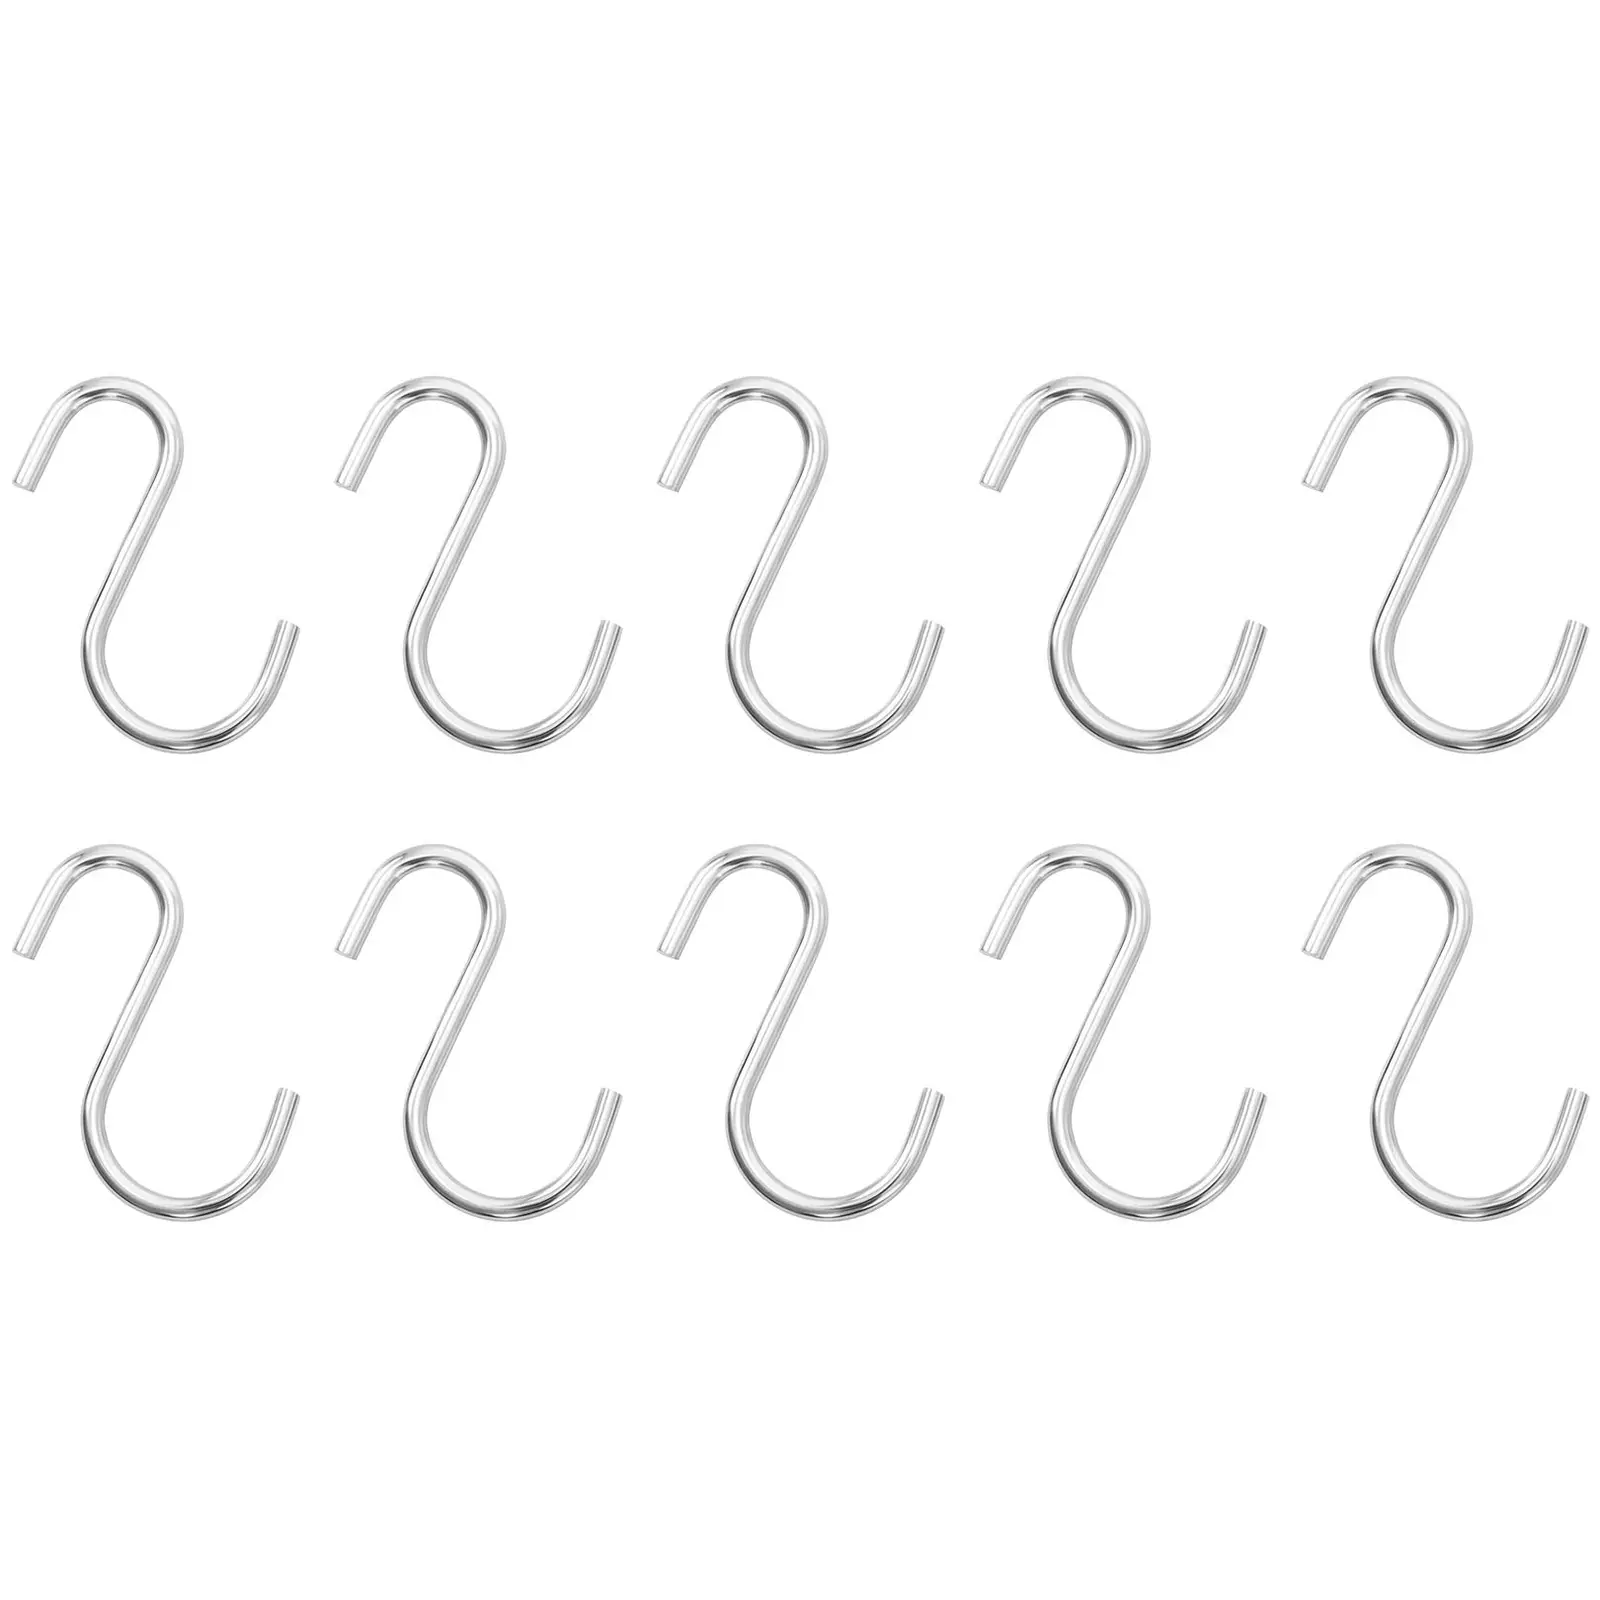 Dent Repair Kit - 15 dent levers + accessories